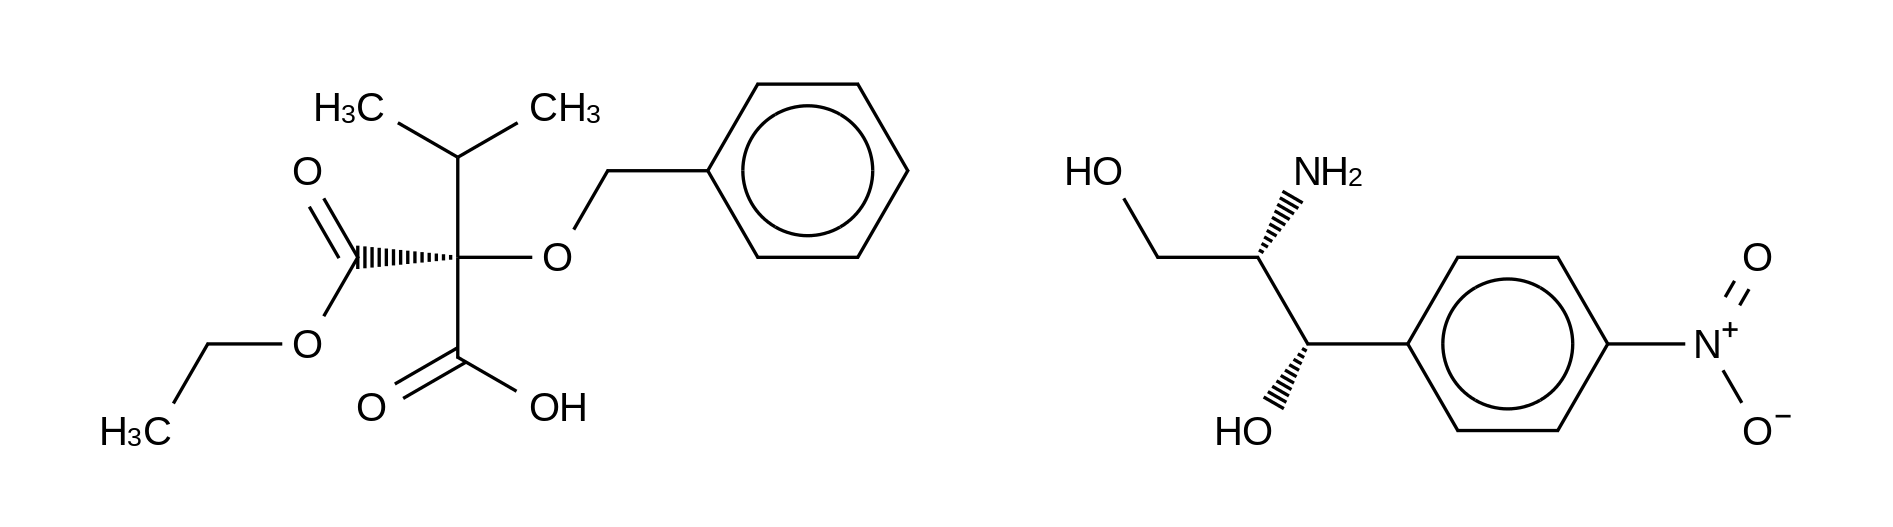 (2R)-2-Isopropyl-2-(benzyloxy)-propanedioic Acid 1-Ethyl Ester (1S,2S)-2-Amino-1-(4-nitrophenyl)-1,3-propanediol Salt